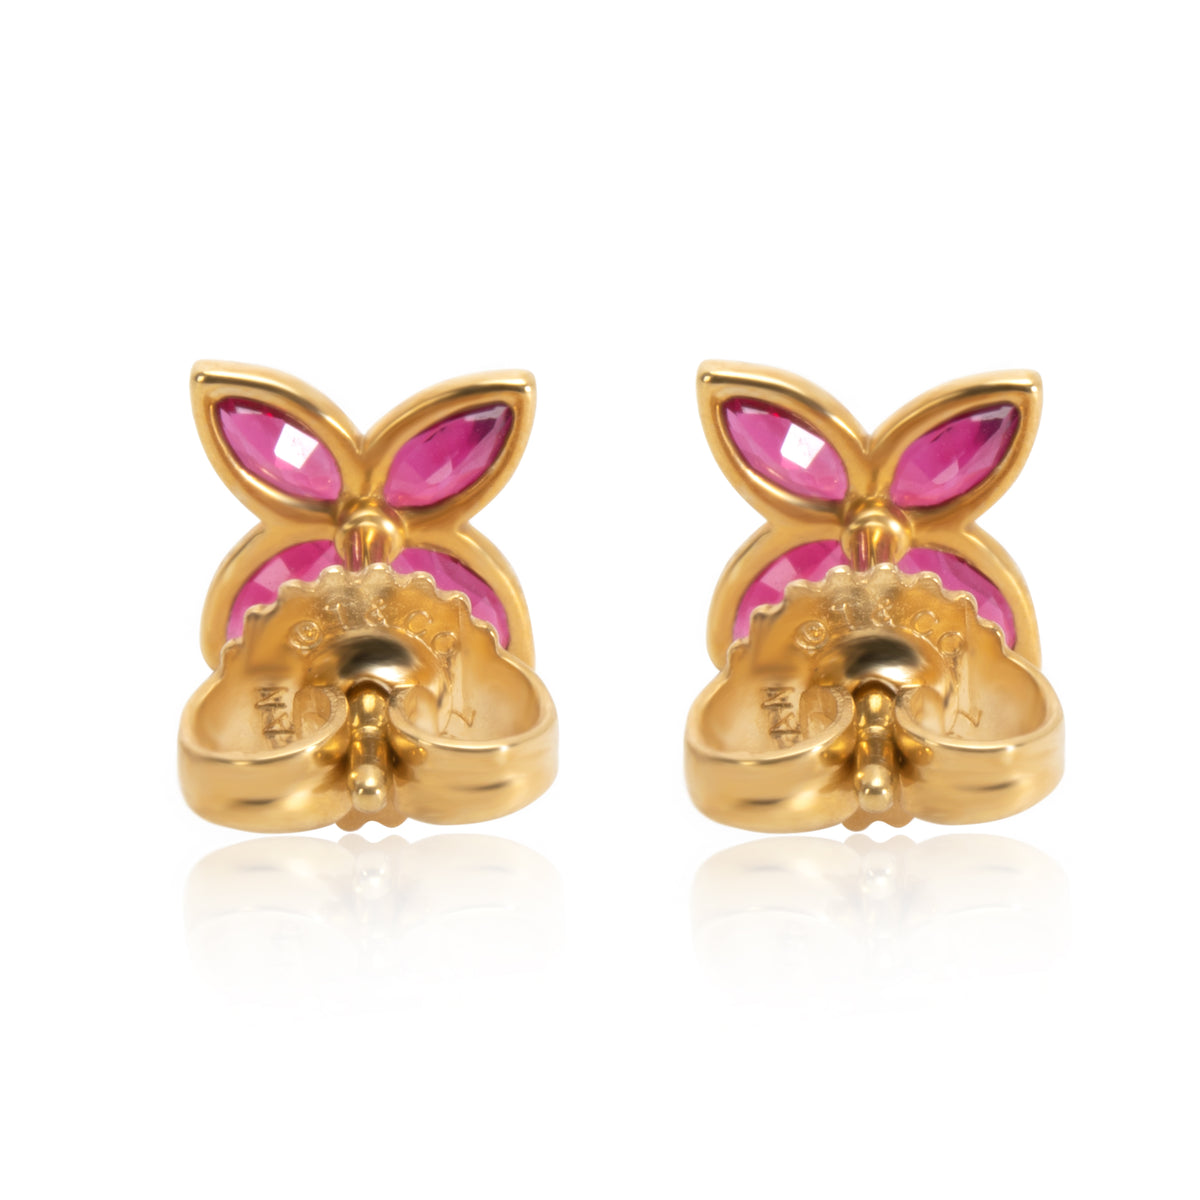 Tiffany & Co. Victoria Ruby Earrings in 18K Rose Gold